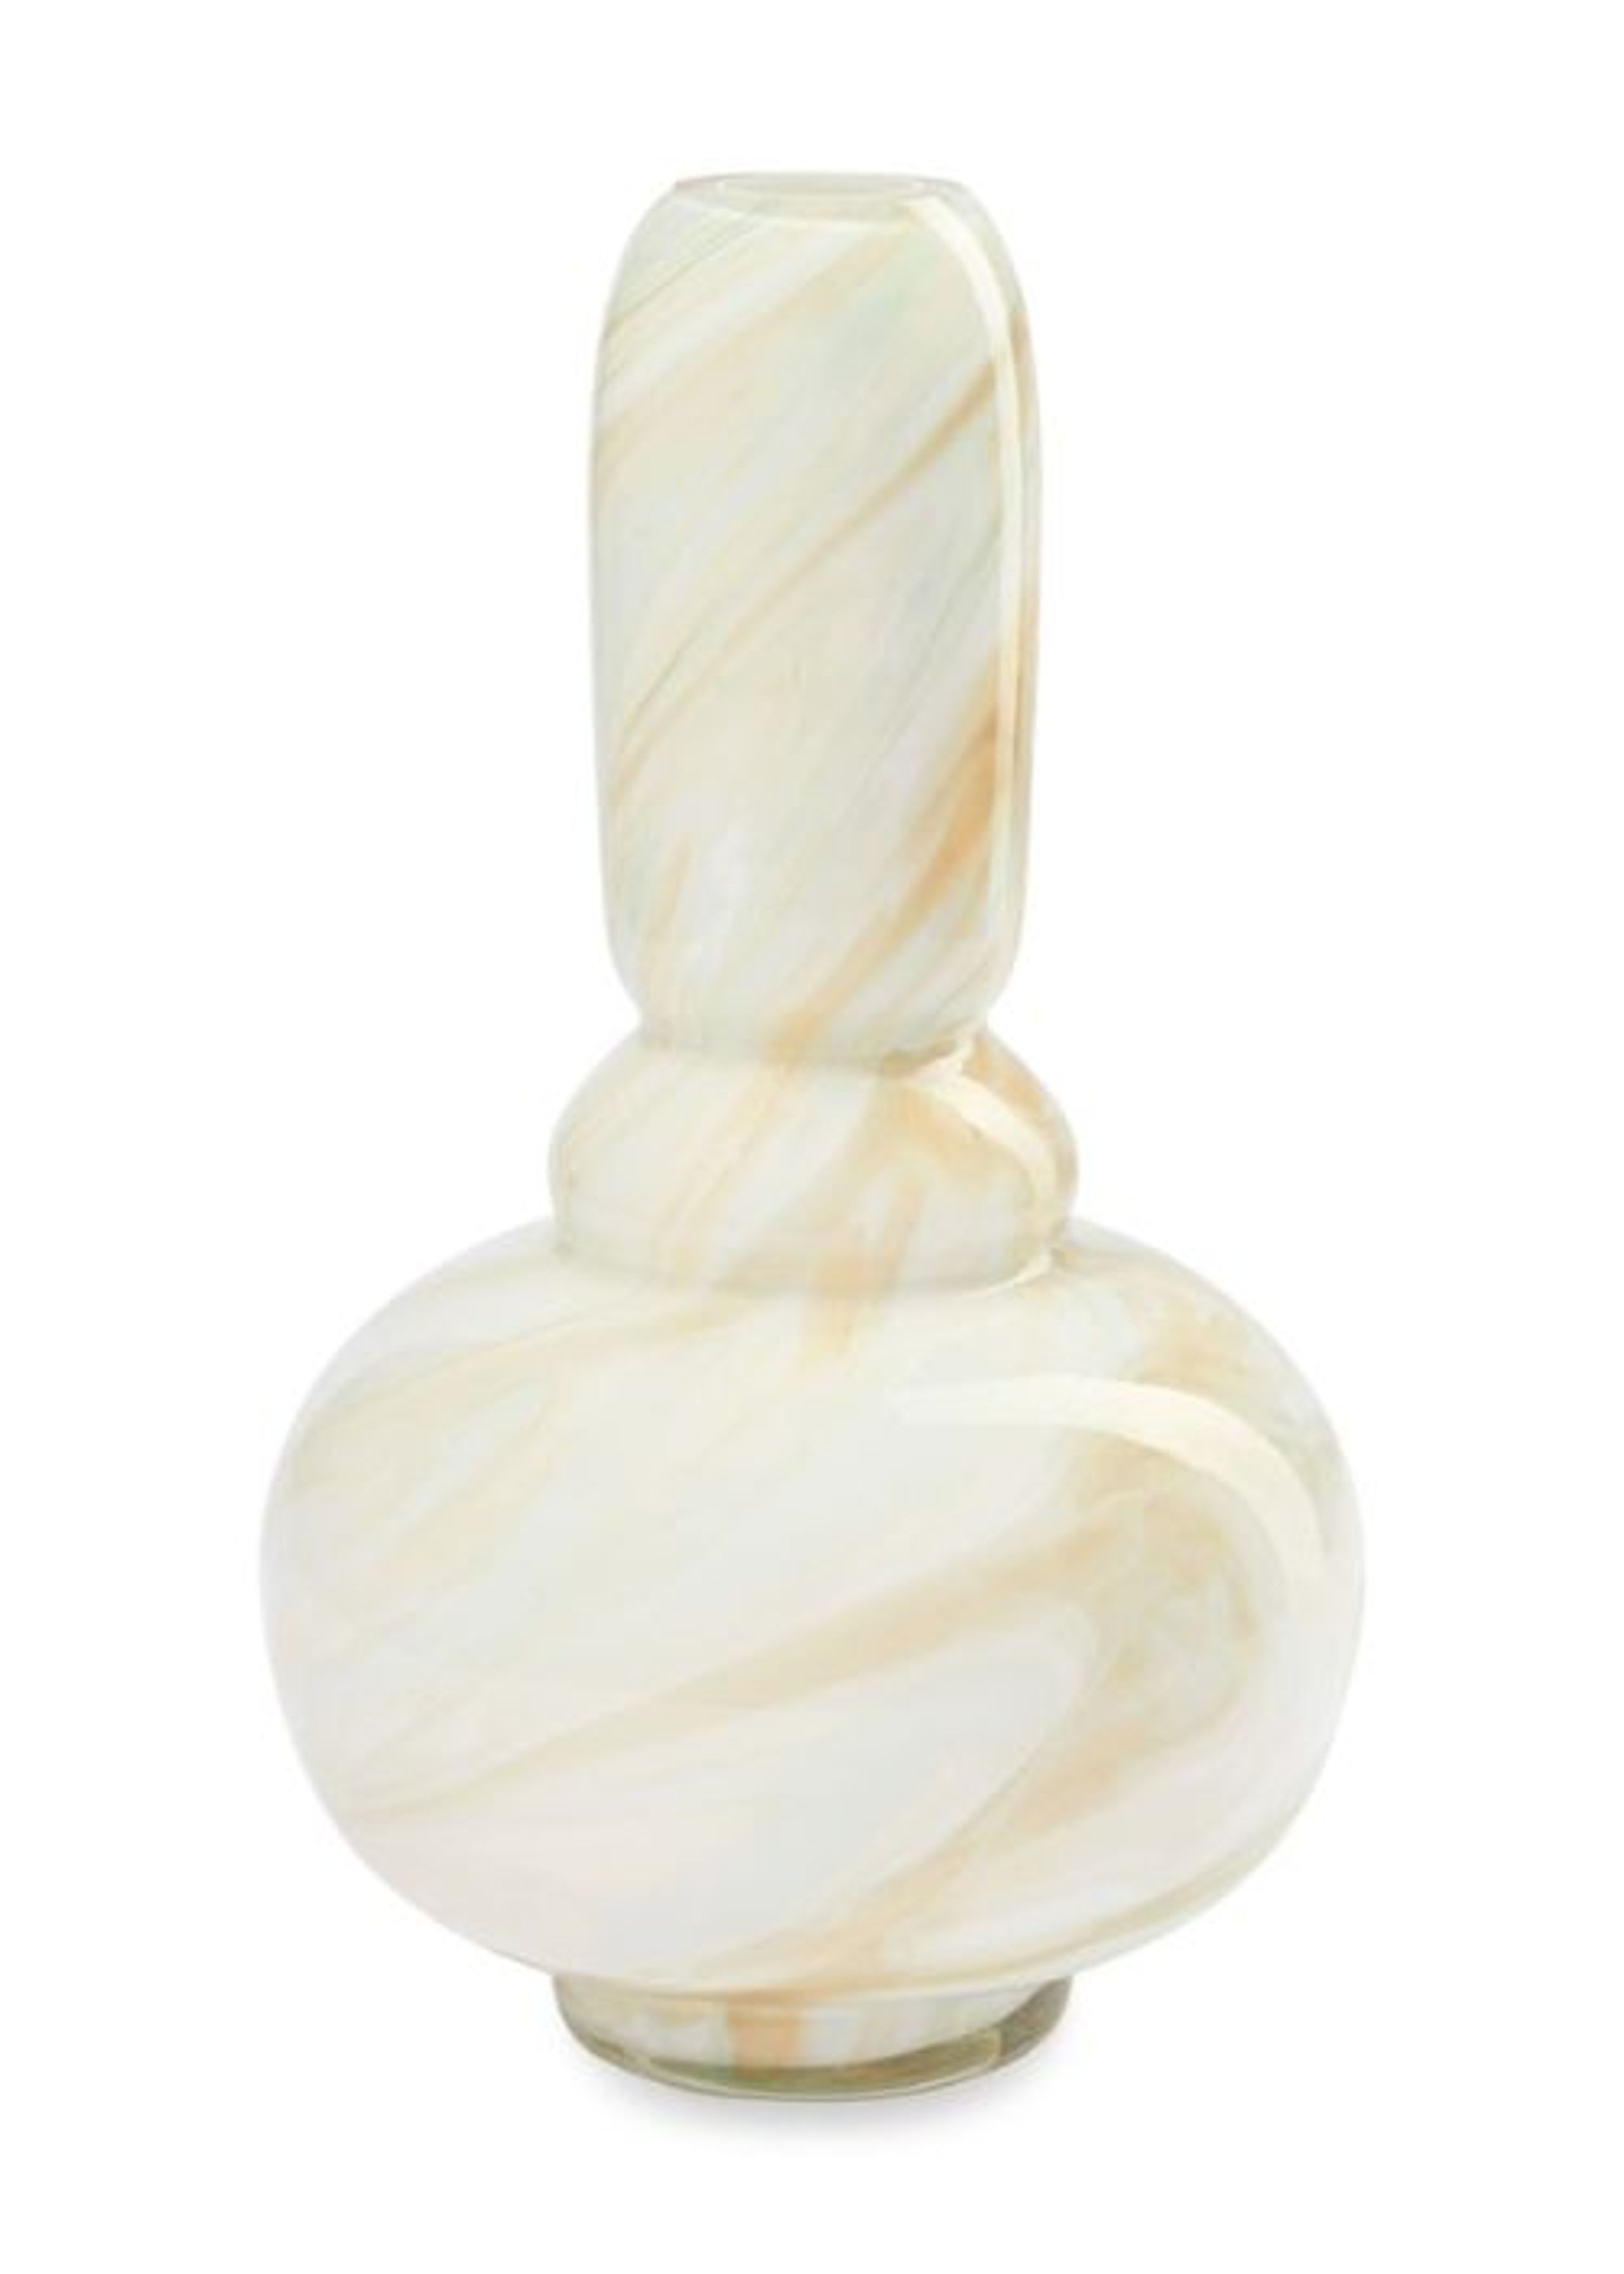 eden outcast - Vase - Twirl Vase - Twirl Vase Marble Yellow Tall